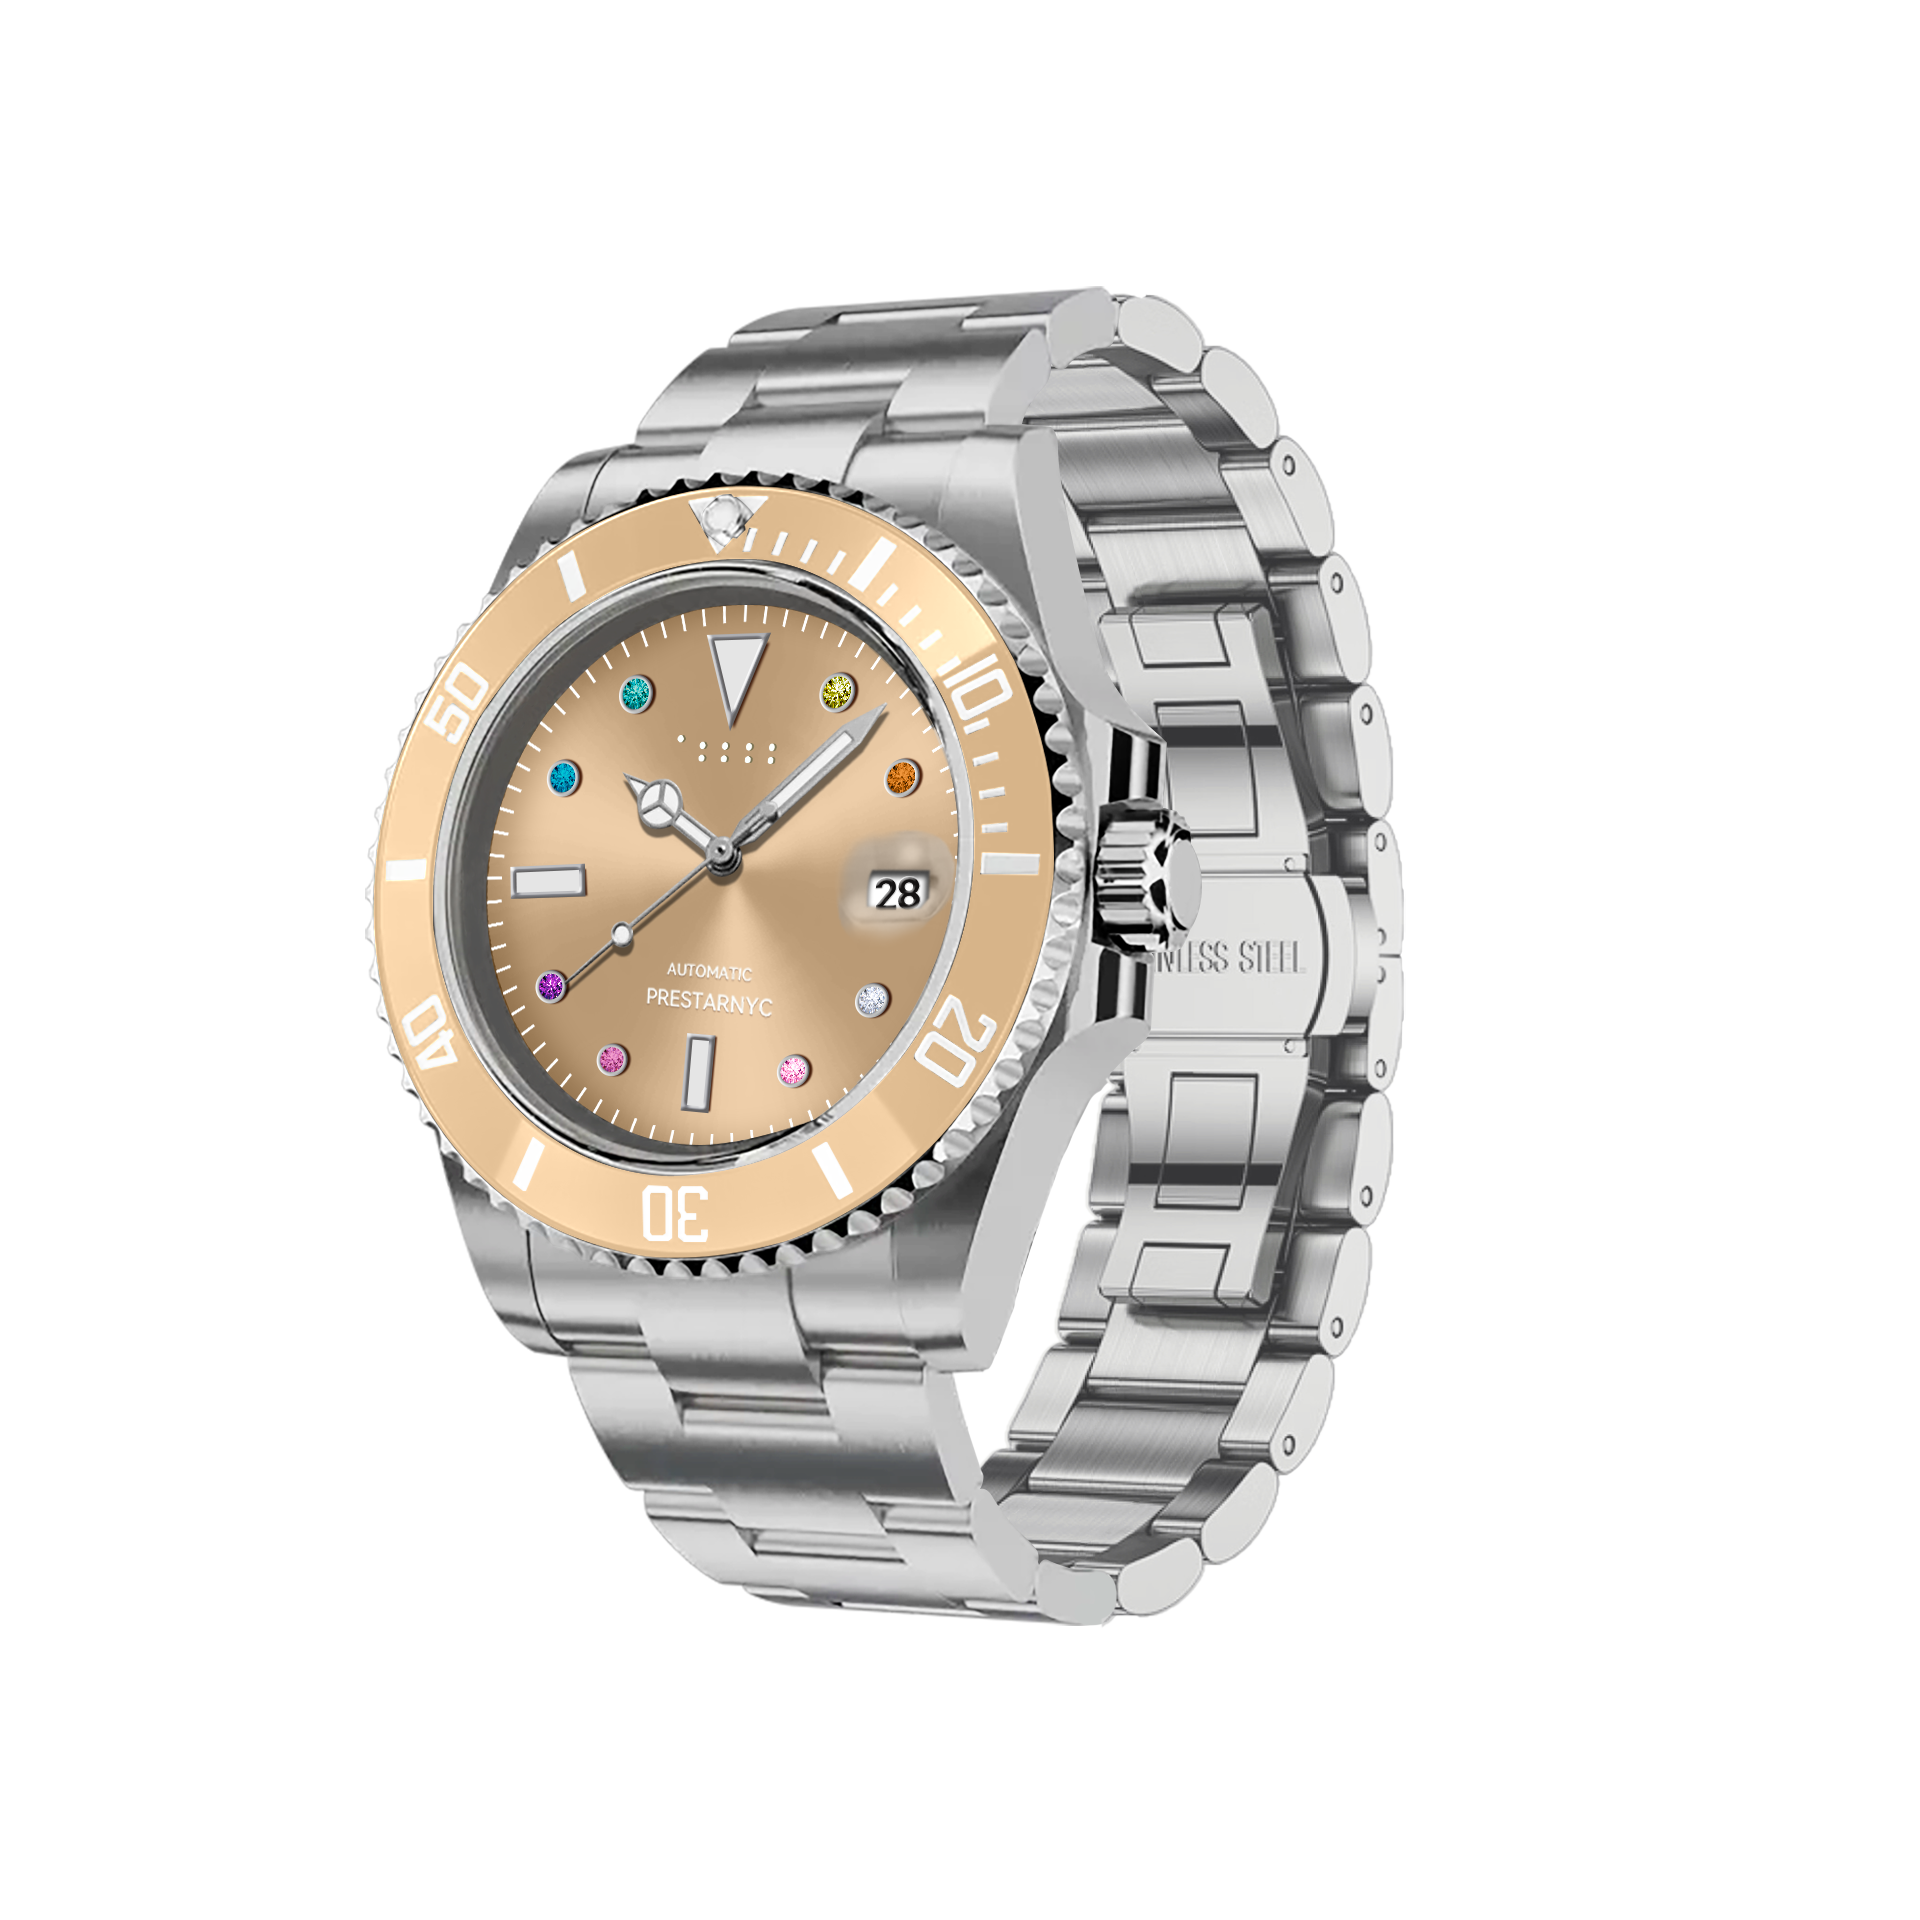 Prestar NYC Aquaman Classic Multi-color Diamond Watch (Beige)